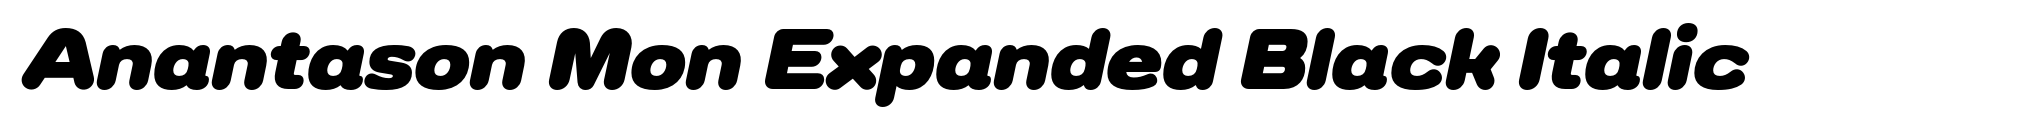 Anantason Mon Expanded Black Italic image